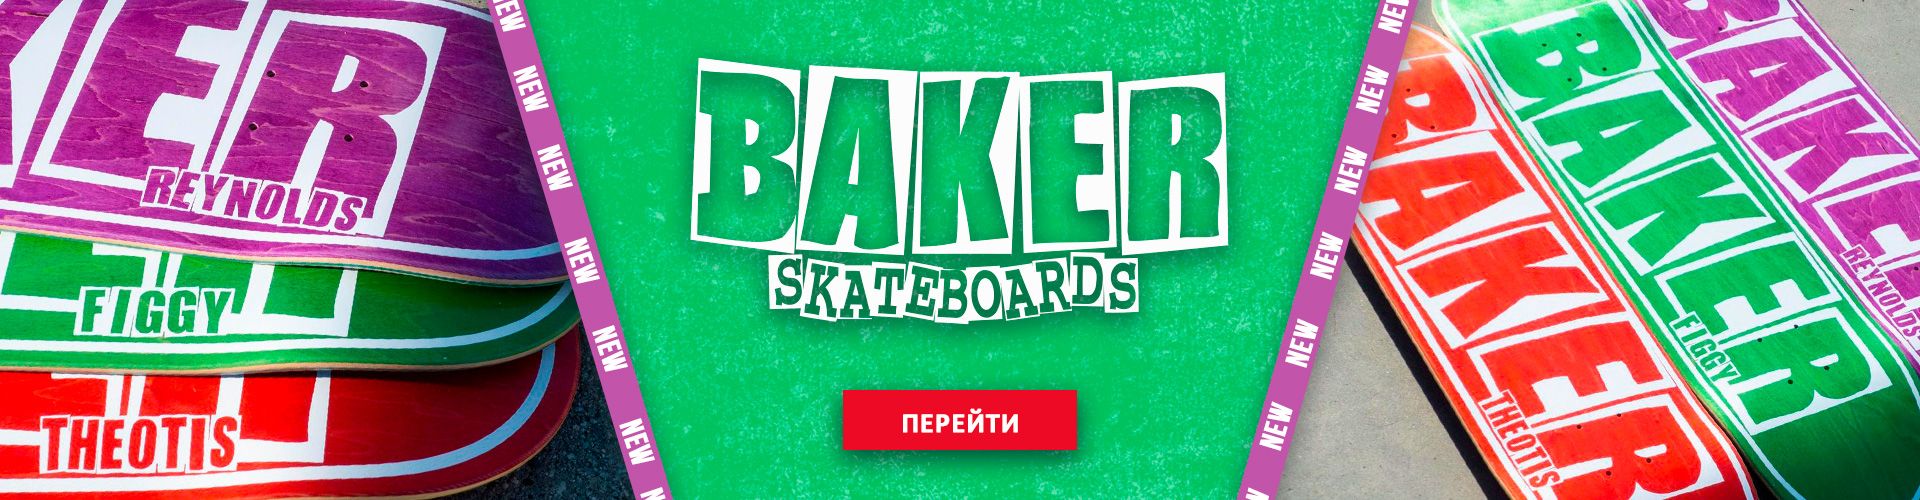 Baker Skateboards > Новое Поступление >